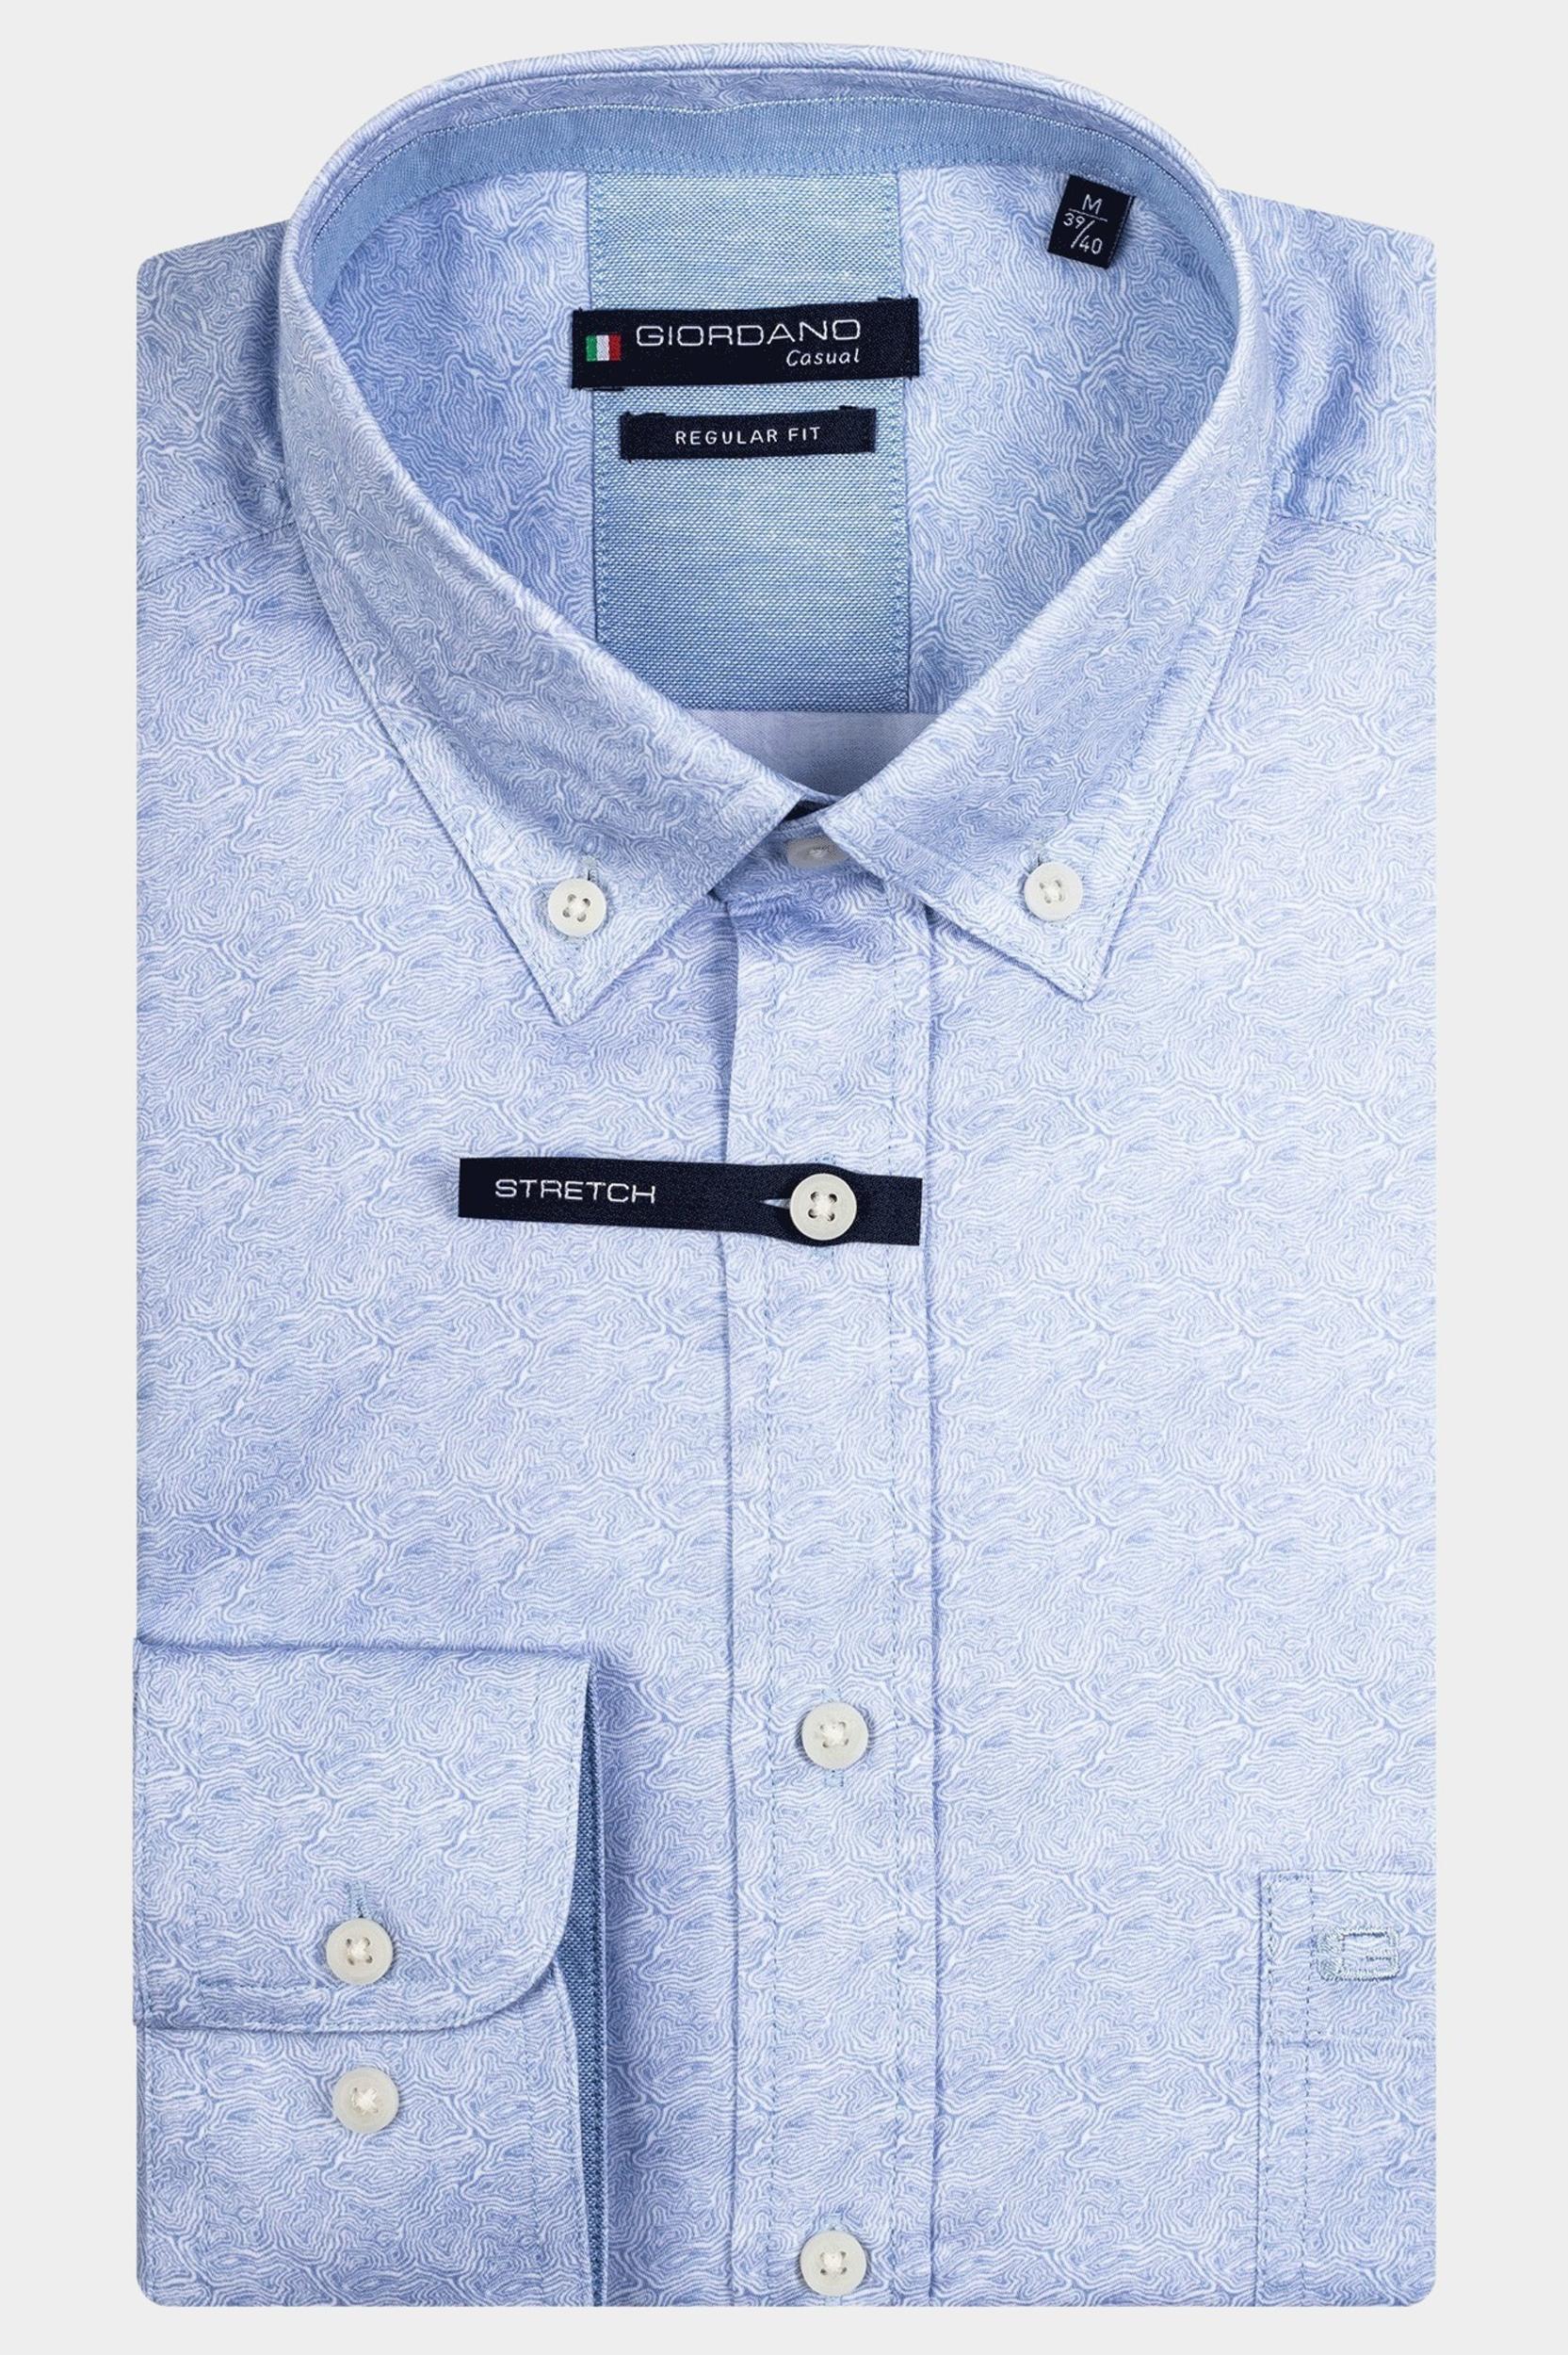 Giordano Casual hemd korte mouw Blauw League Minimal Lines Print 416004/60